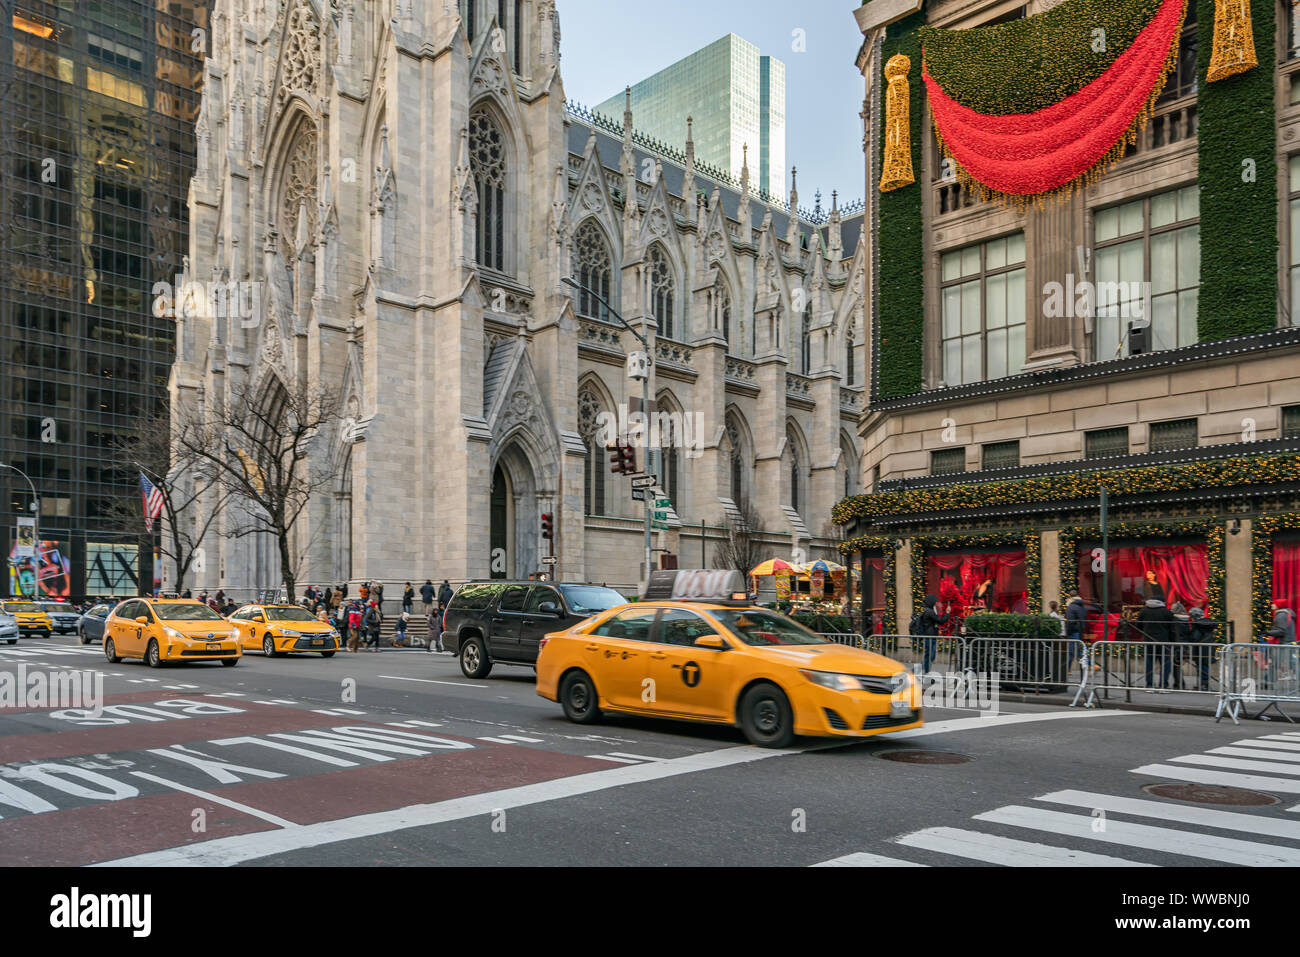 New York, NY, USA - Décembre 2018 - rues de Manhattan, taxi jaune classique Traversée de la Cinquième Avenue, près de Saks Fifth Avenue Banque D'Images